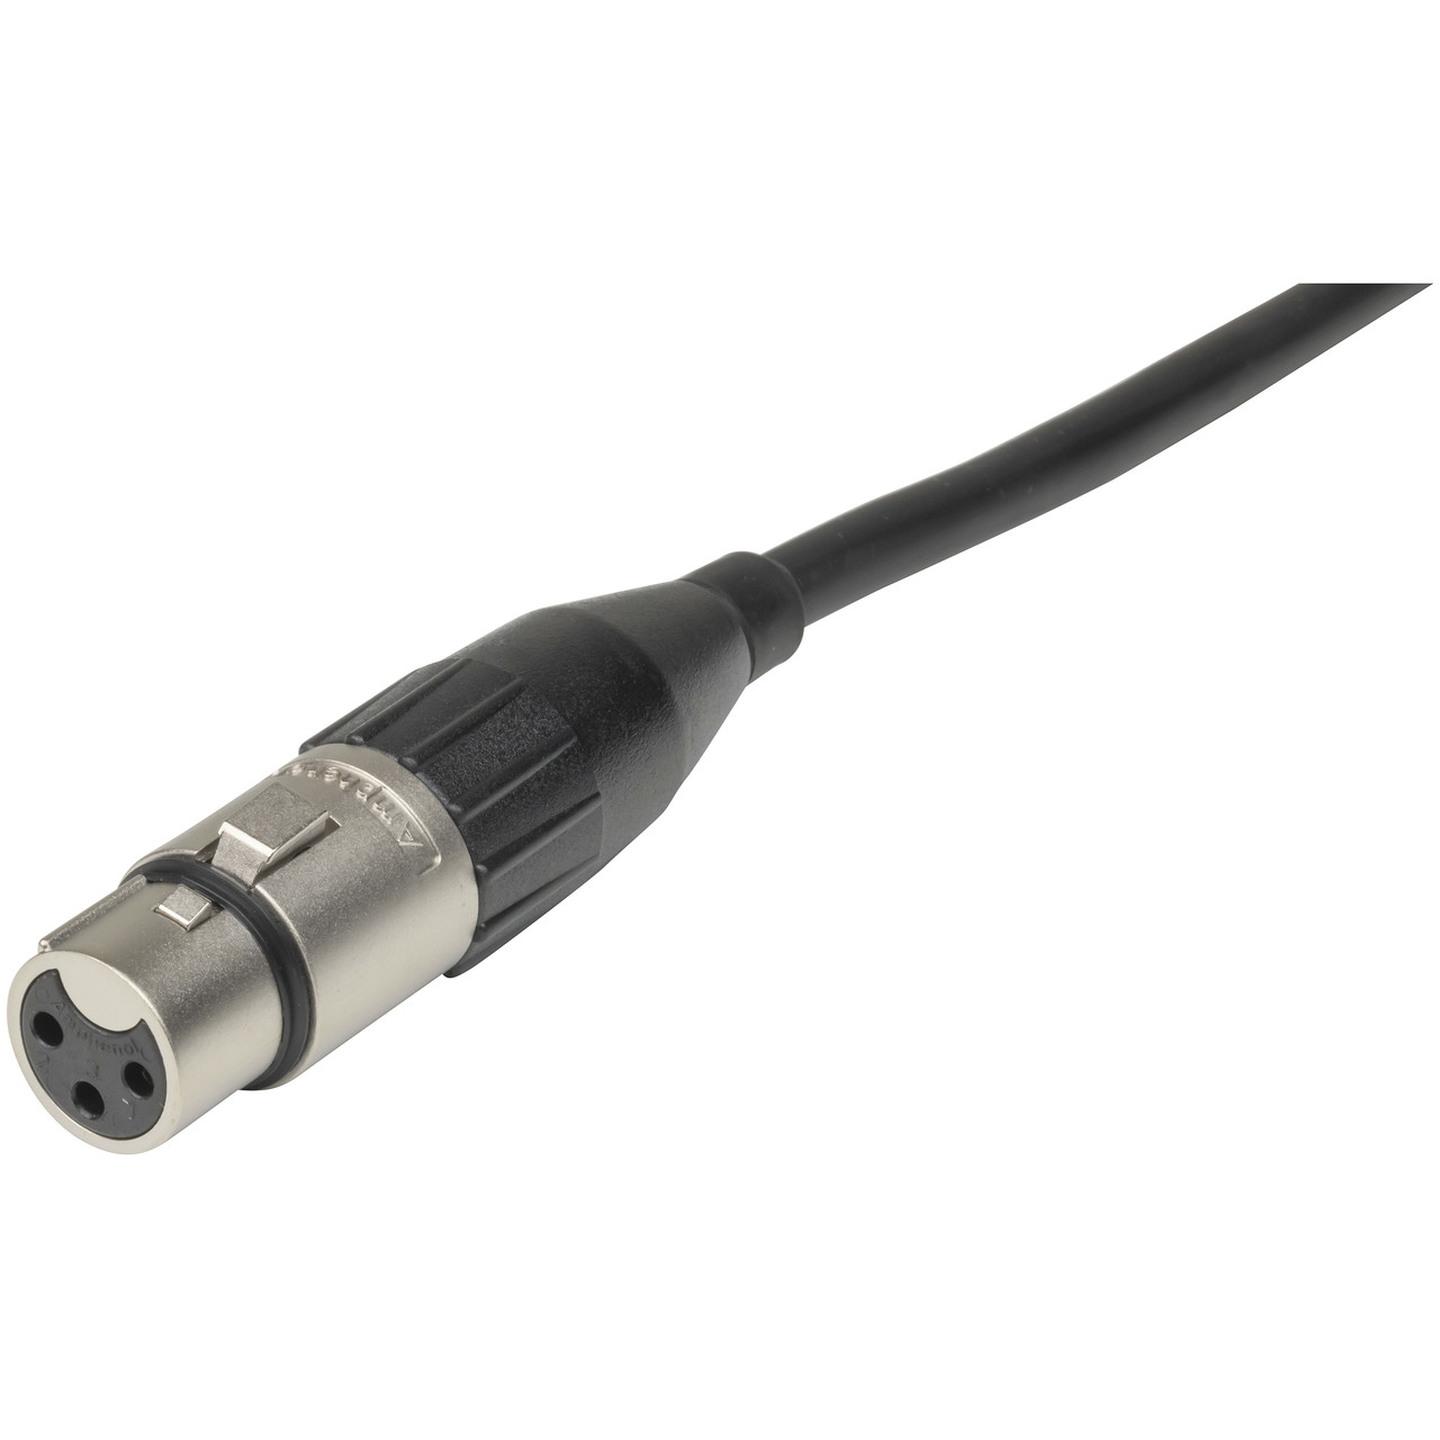 Amphenol Balanced Microphone Cable - 6 Metre